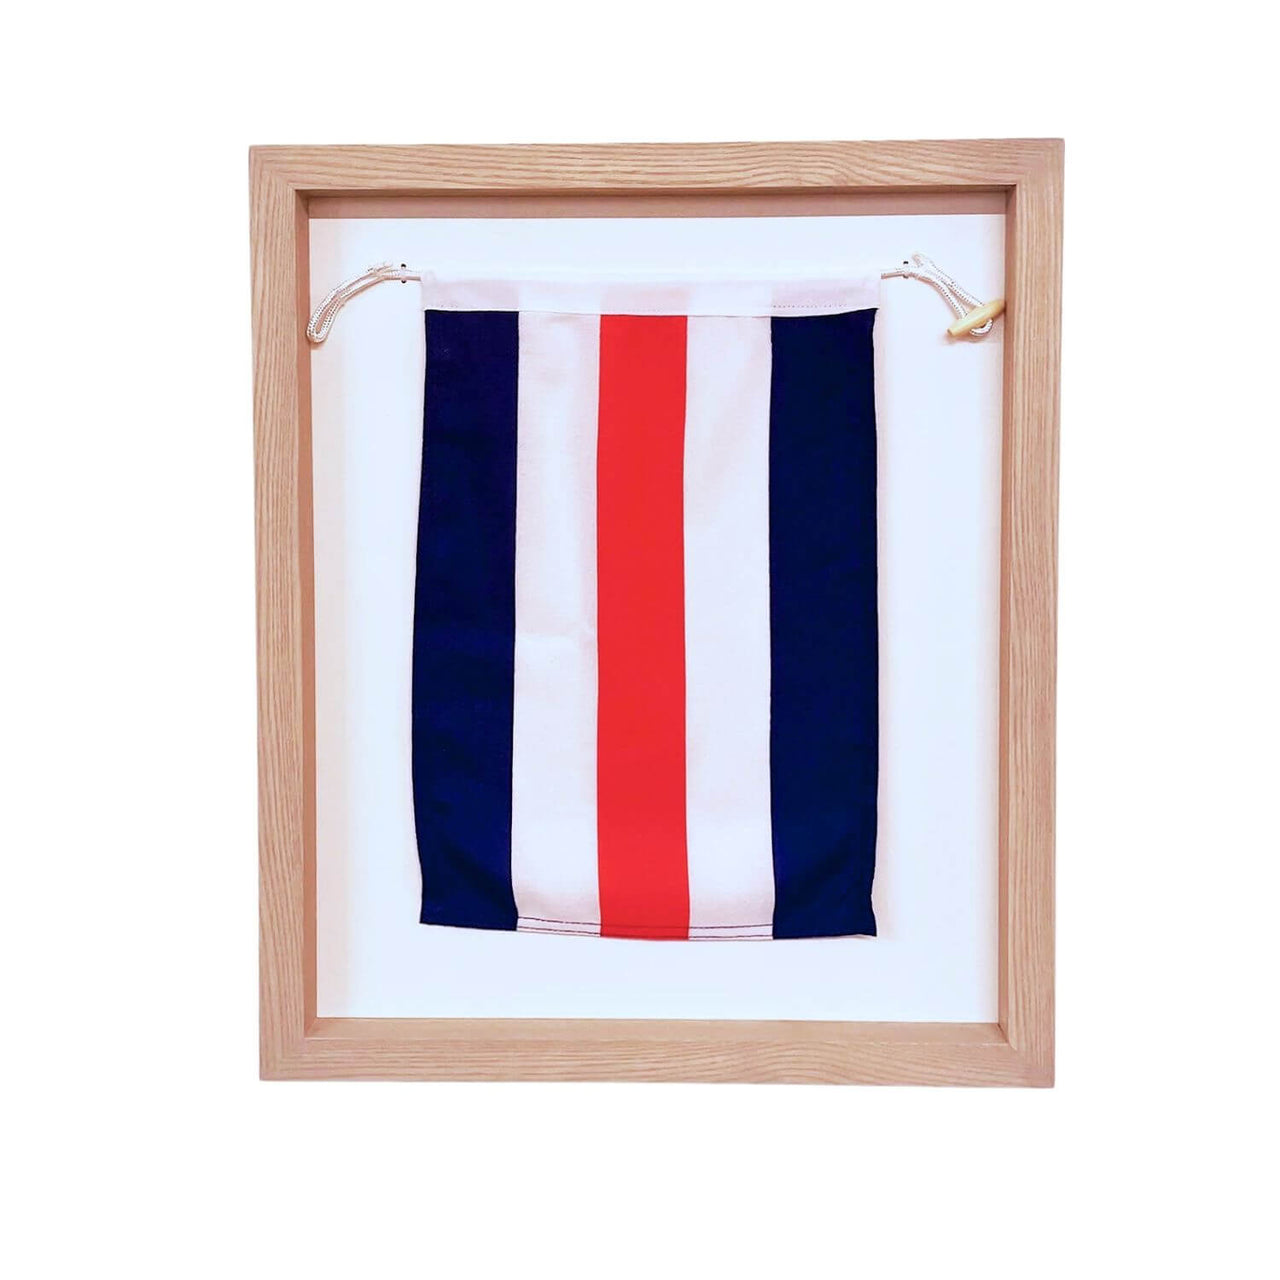 Framed Nautical Flags, A-Z New England Trading Co Decor C